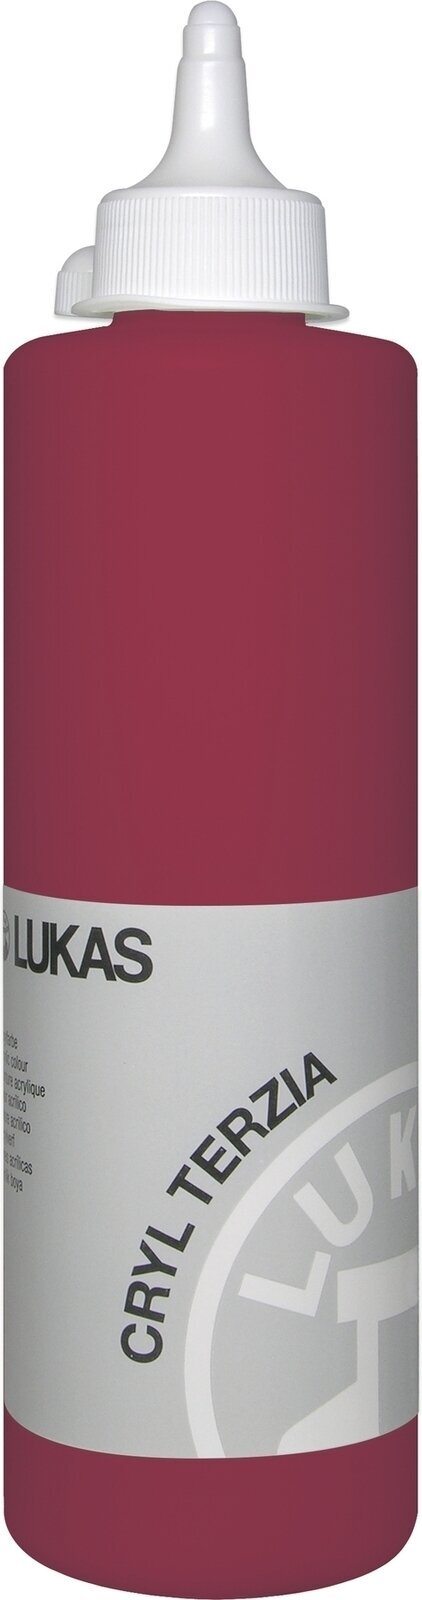 Akrilna barva Lukas Cryl Terzia Acrylic Paint Plastic Bottle Akrilna barva Alizarin Crimson 500 ml 1 kos